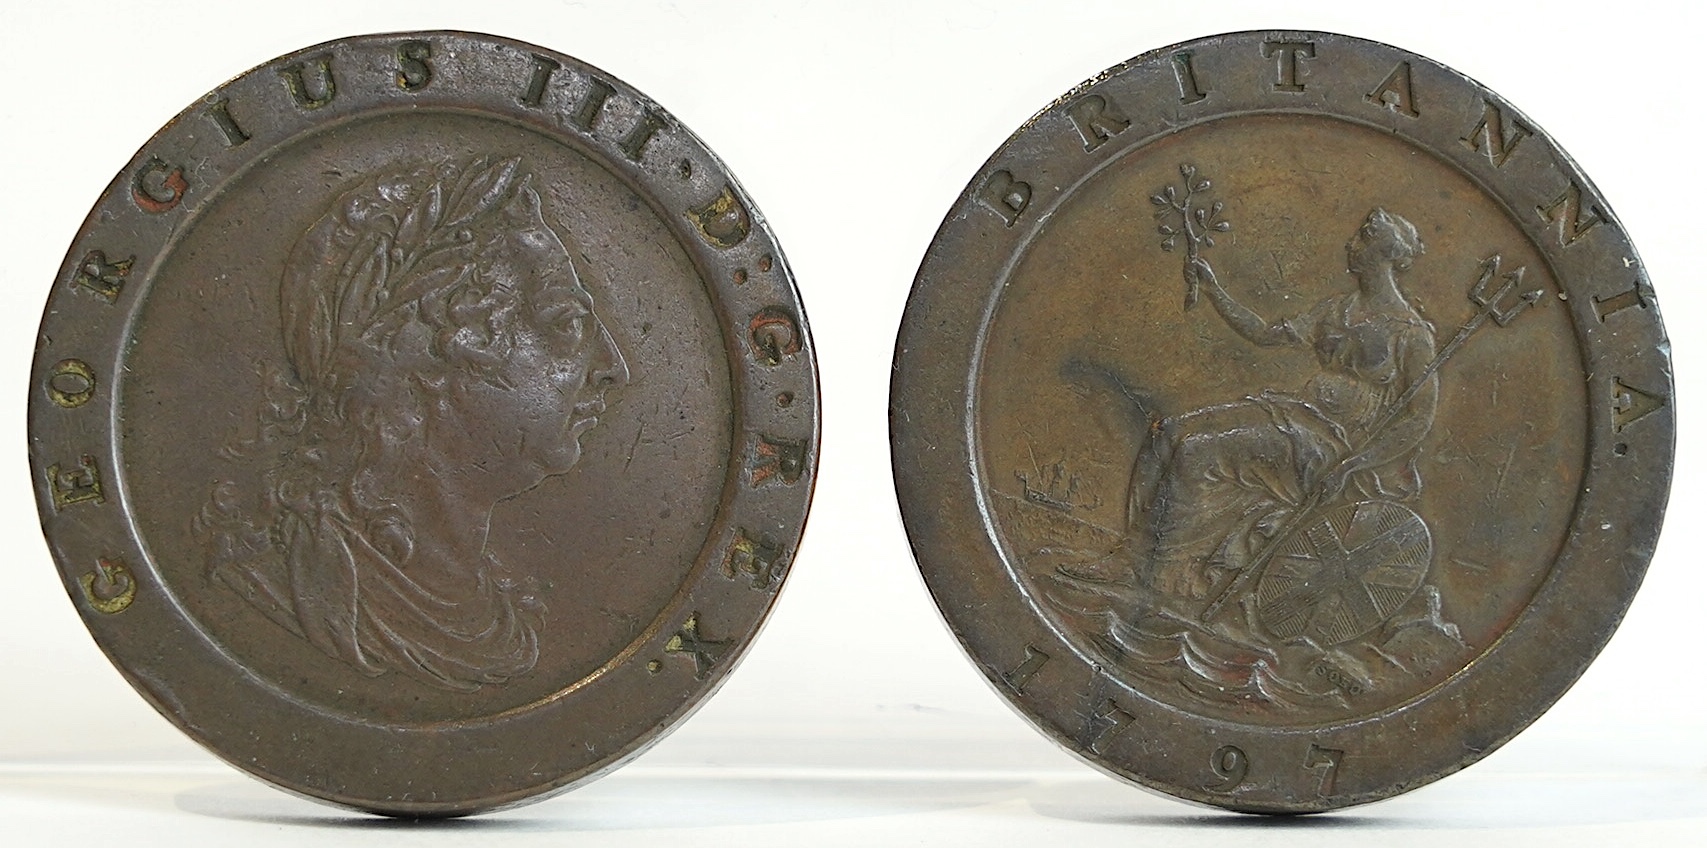 British coins, George III (1760-1820), two 1797 Soho Mint 